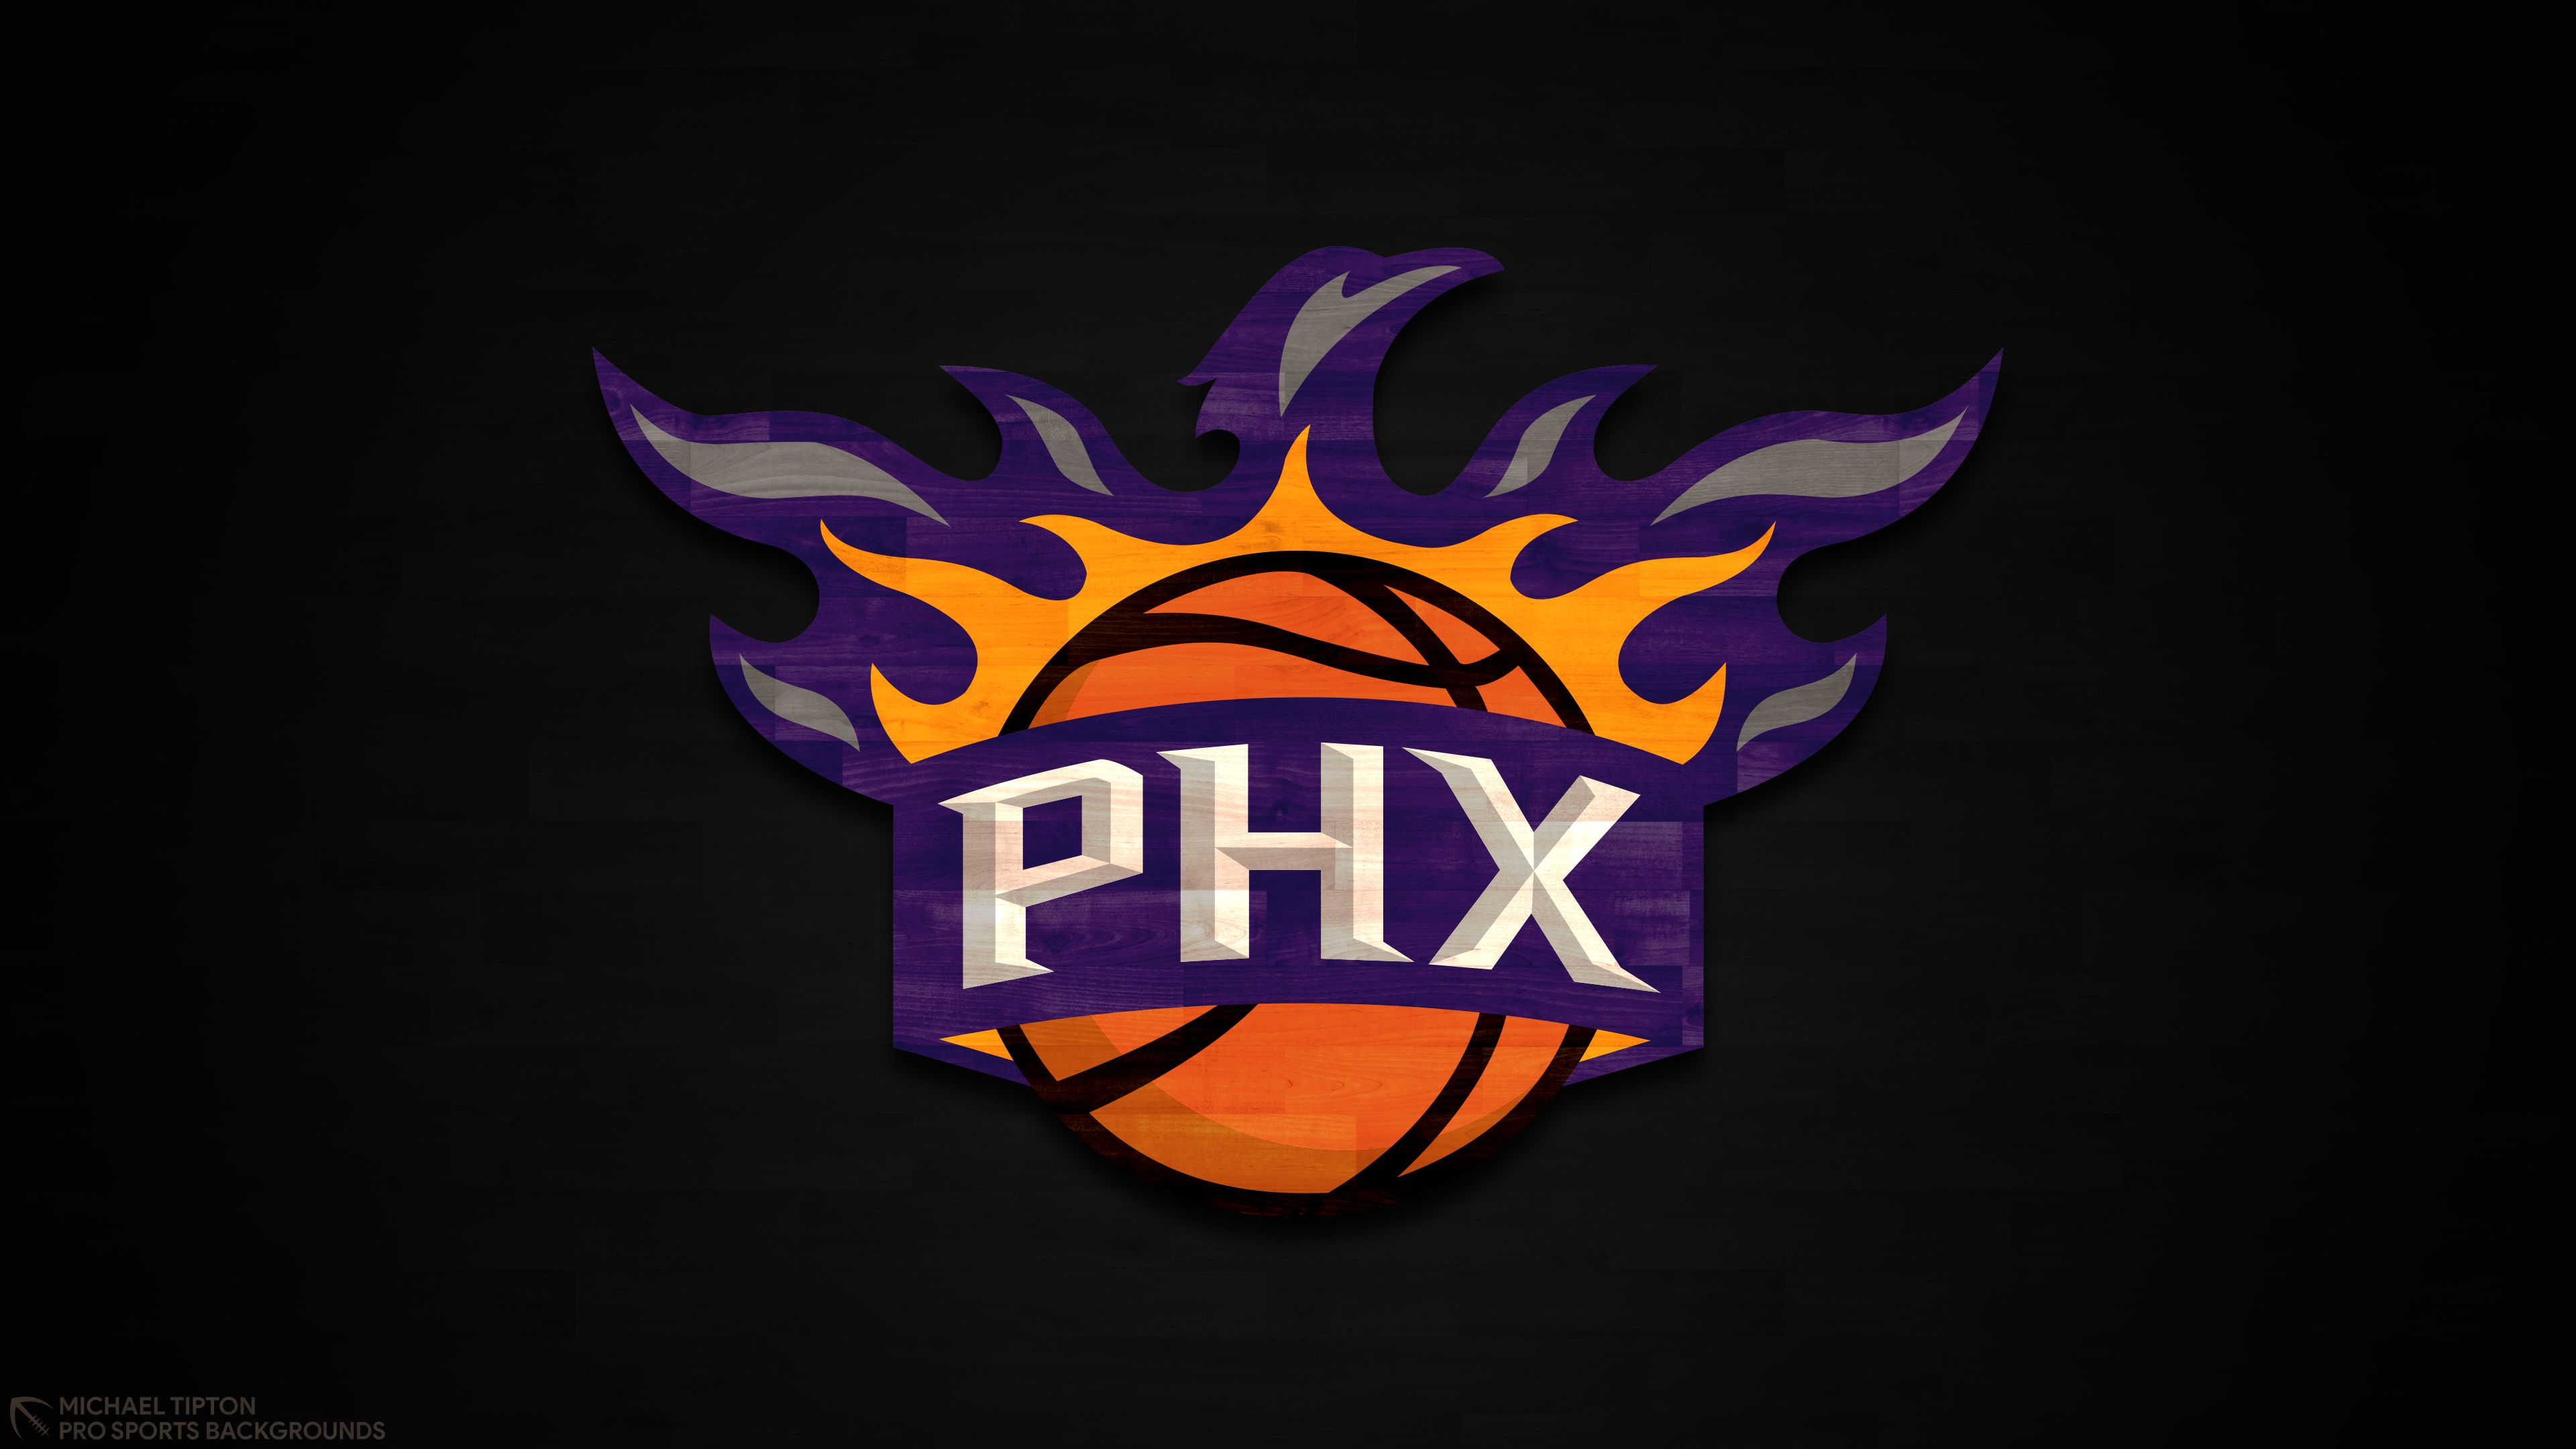 Download Phoenix Suns wallpaper for mobile phone, free Phoenix Suns HD picture